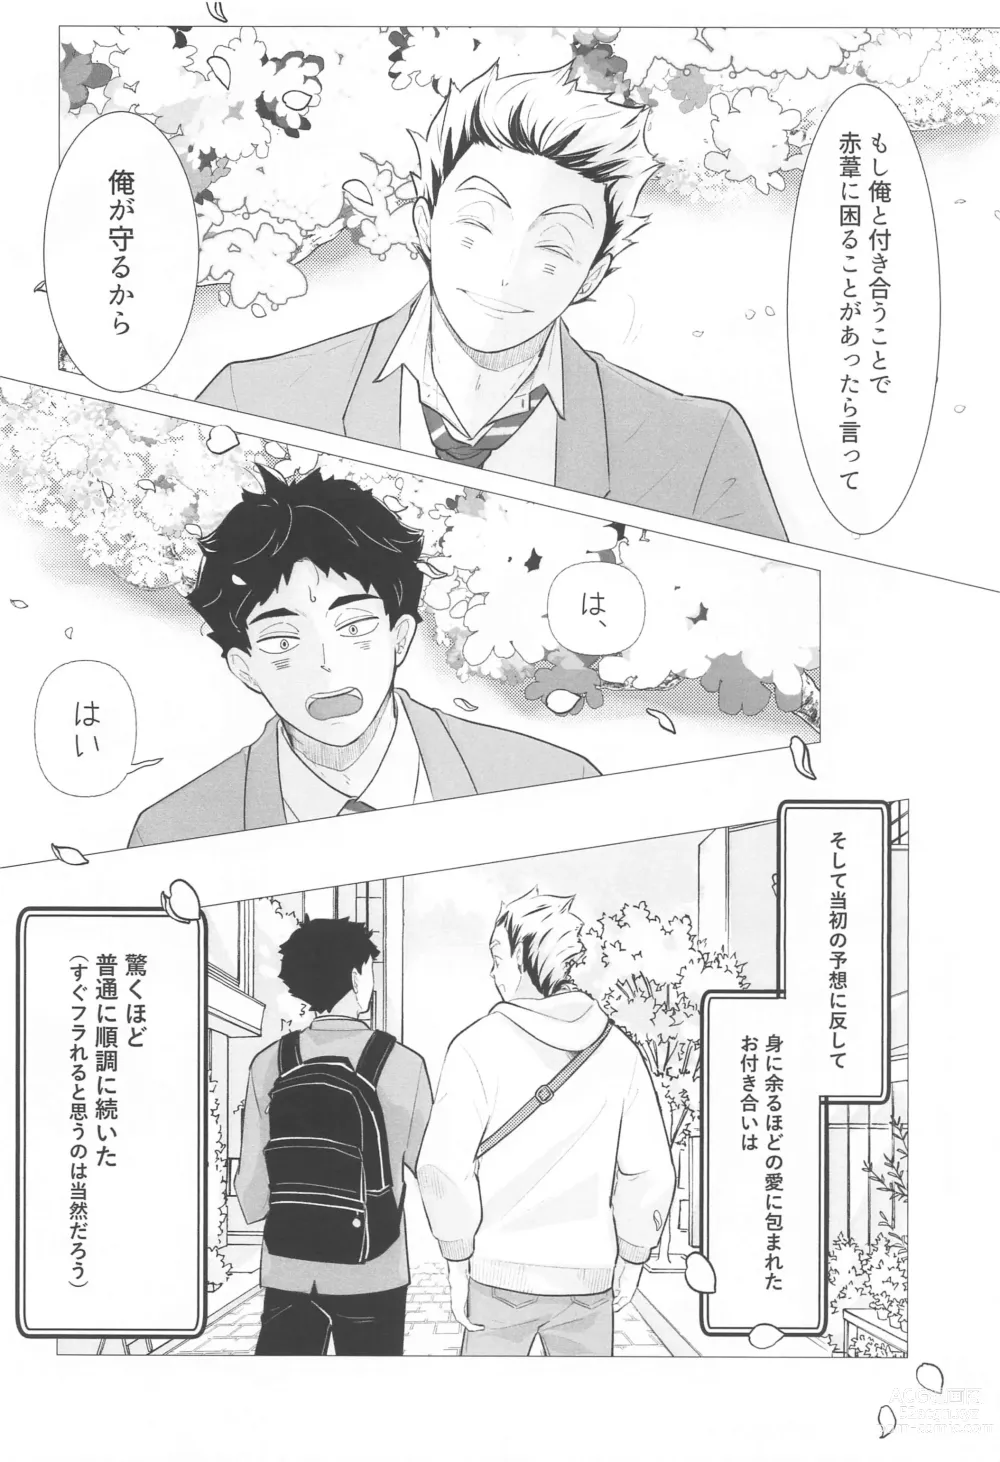 Page 3 of doujinshi Magarinari ni mo Koibito nanode